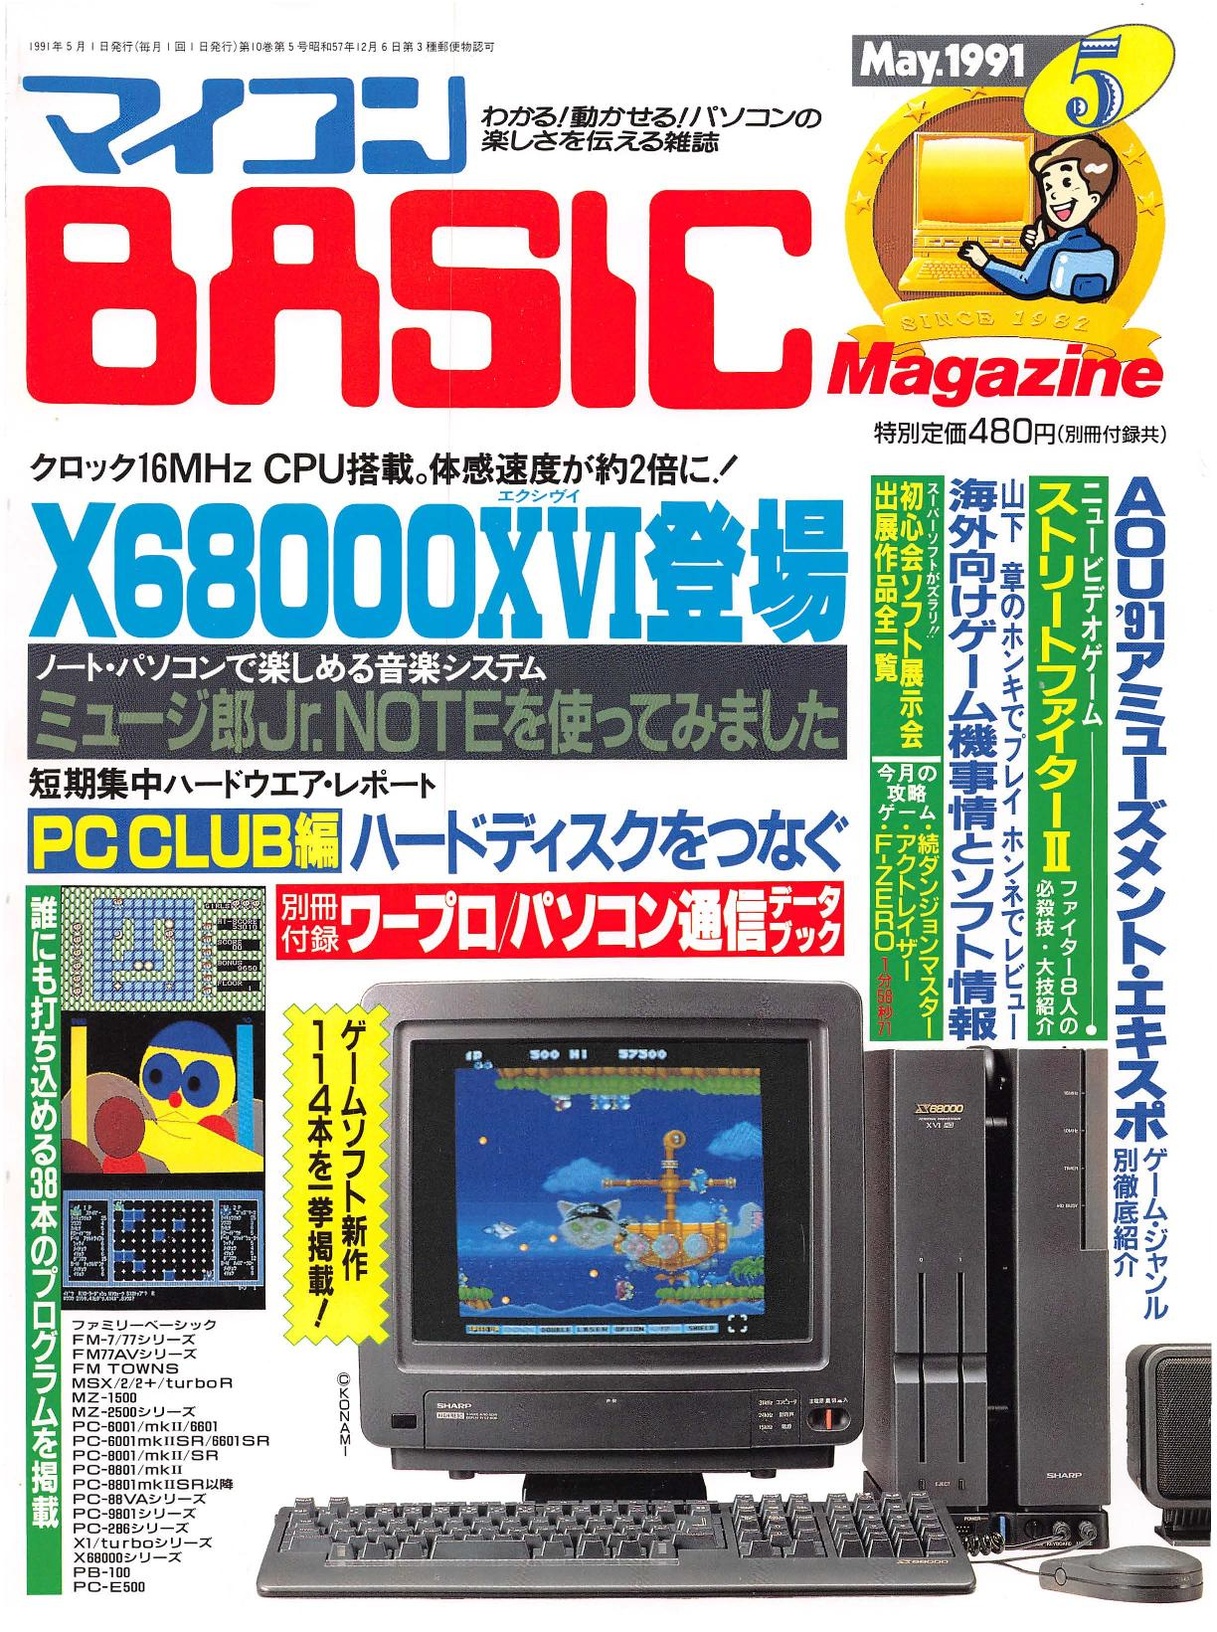 Mycom BASIC Magazine - Sega Retro